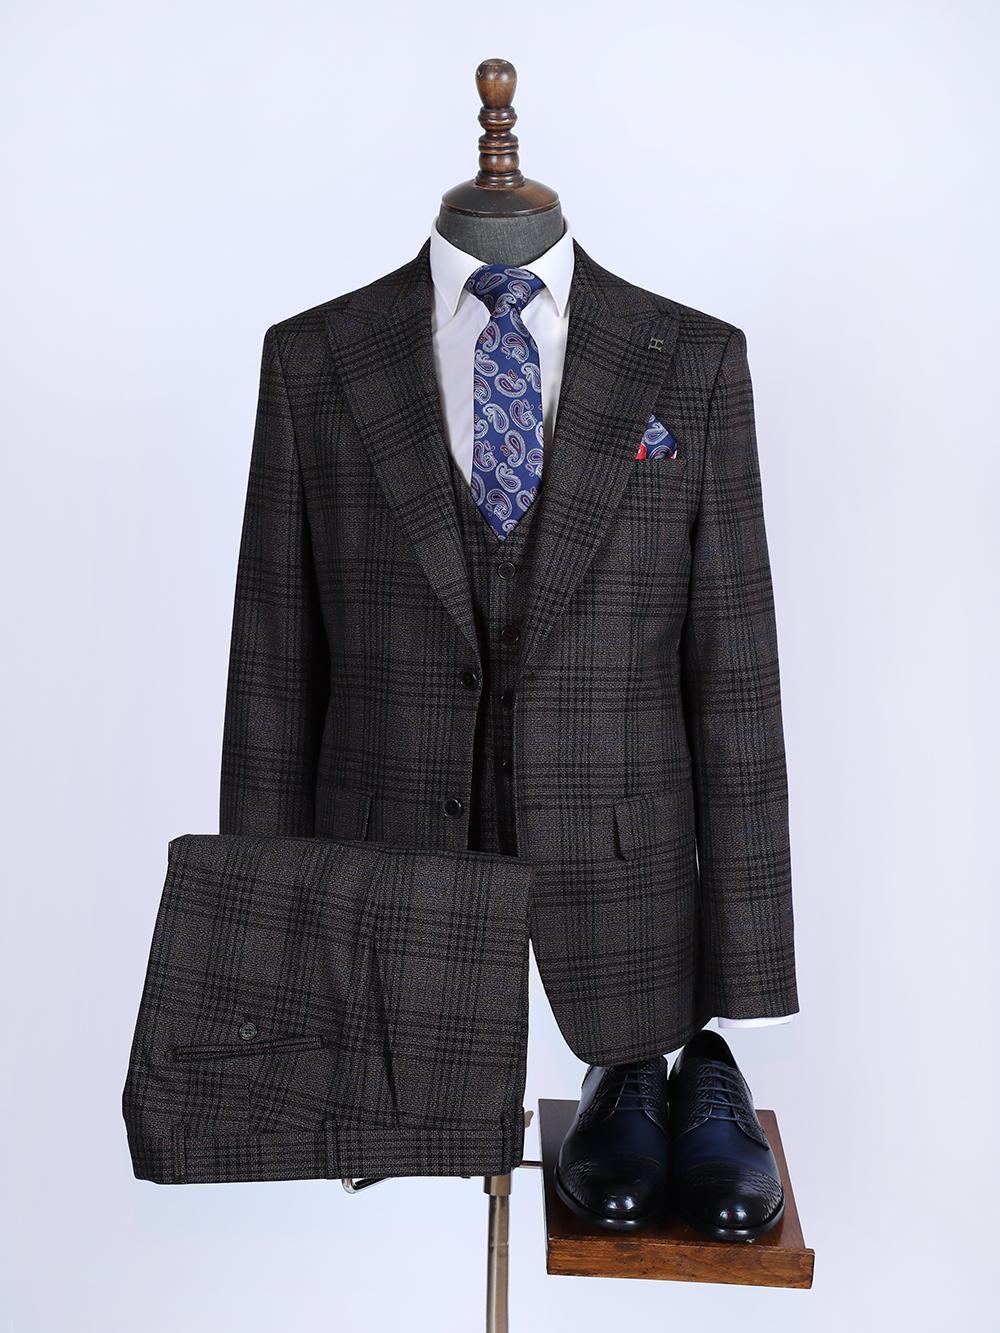 Men's Suit | Custom Made to Measure Suit |Las Cruces